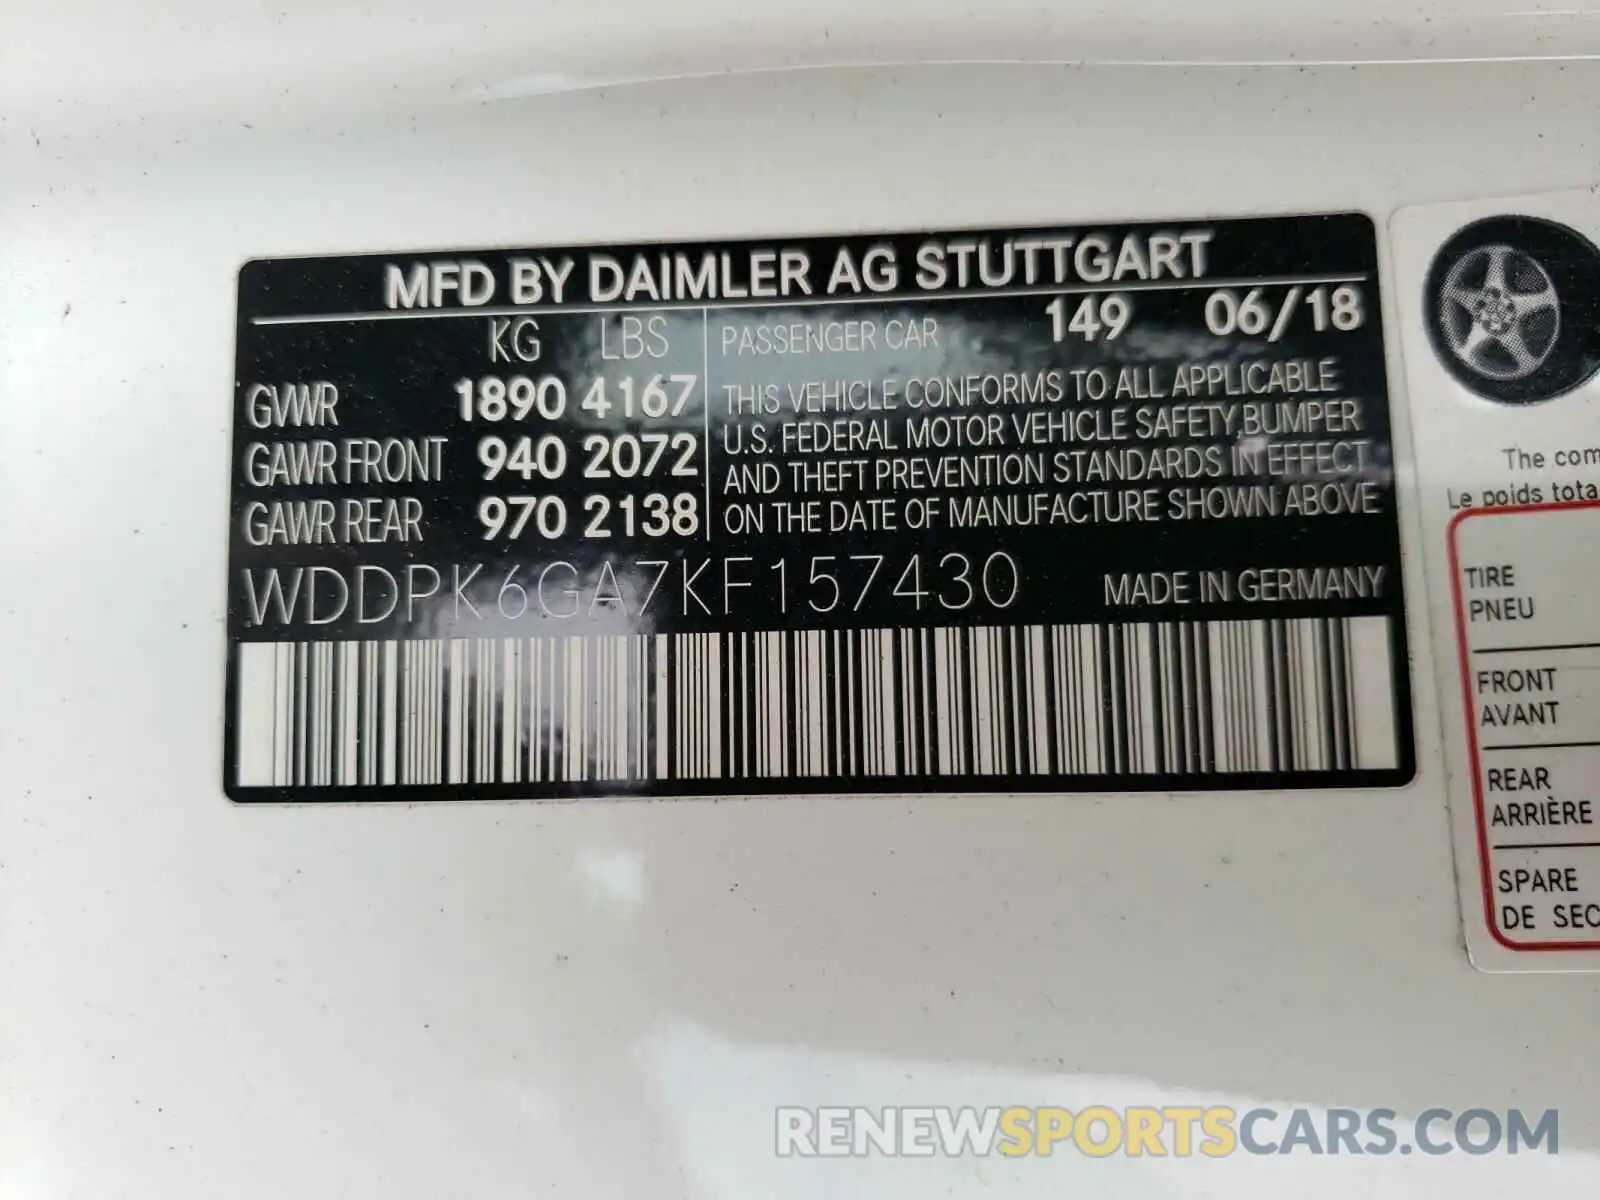 10 Photograph of a damaged car WDDPK6GA7KF157430 MERCEDES-BENZ AMG 2019